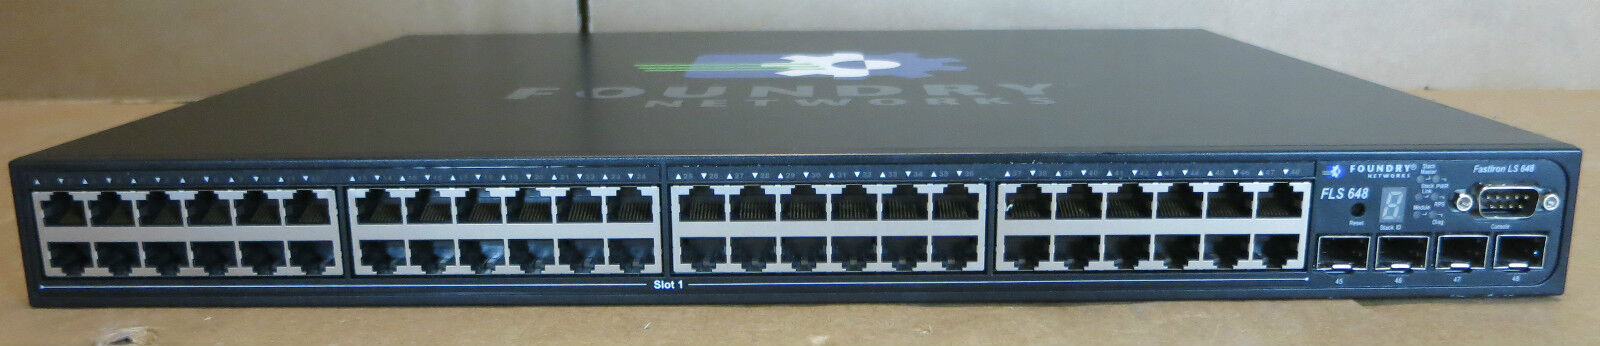 Foundry Networks FastIron FLS 648 Switch 48x 10/100/1000 + 4x Combo Gigabit SFP